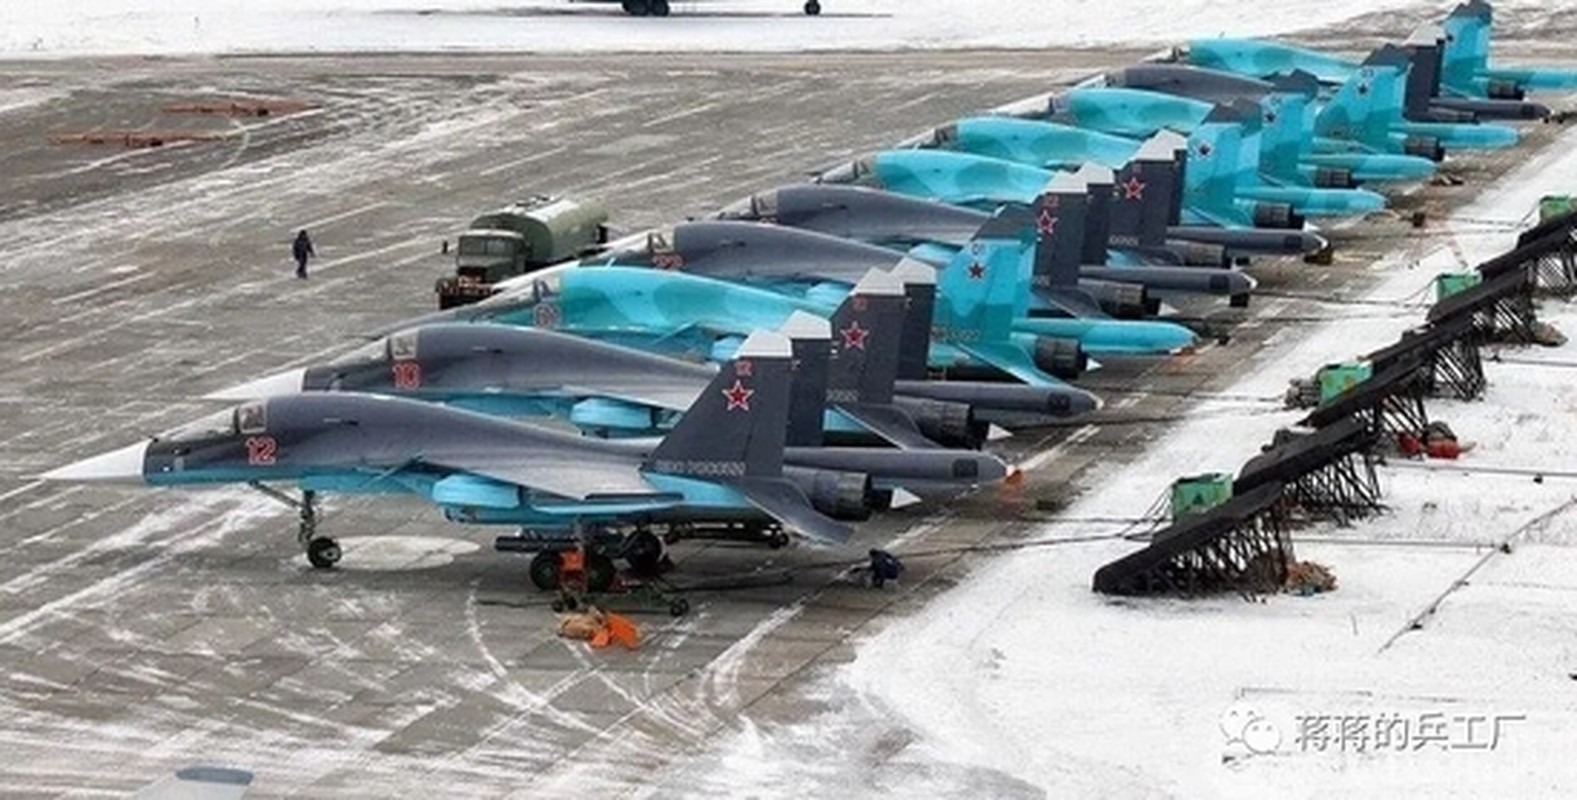 Lo nguyen nhan “Thu mo vit” Su-34 cua Nga bi ban roi o Ukraine-Hinh-8